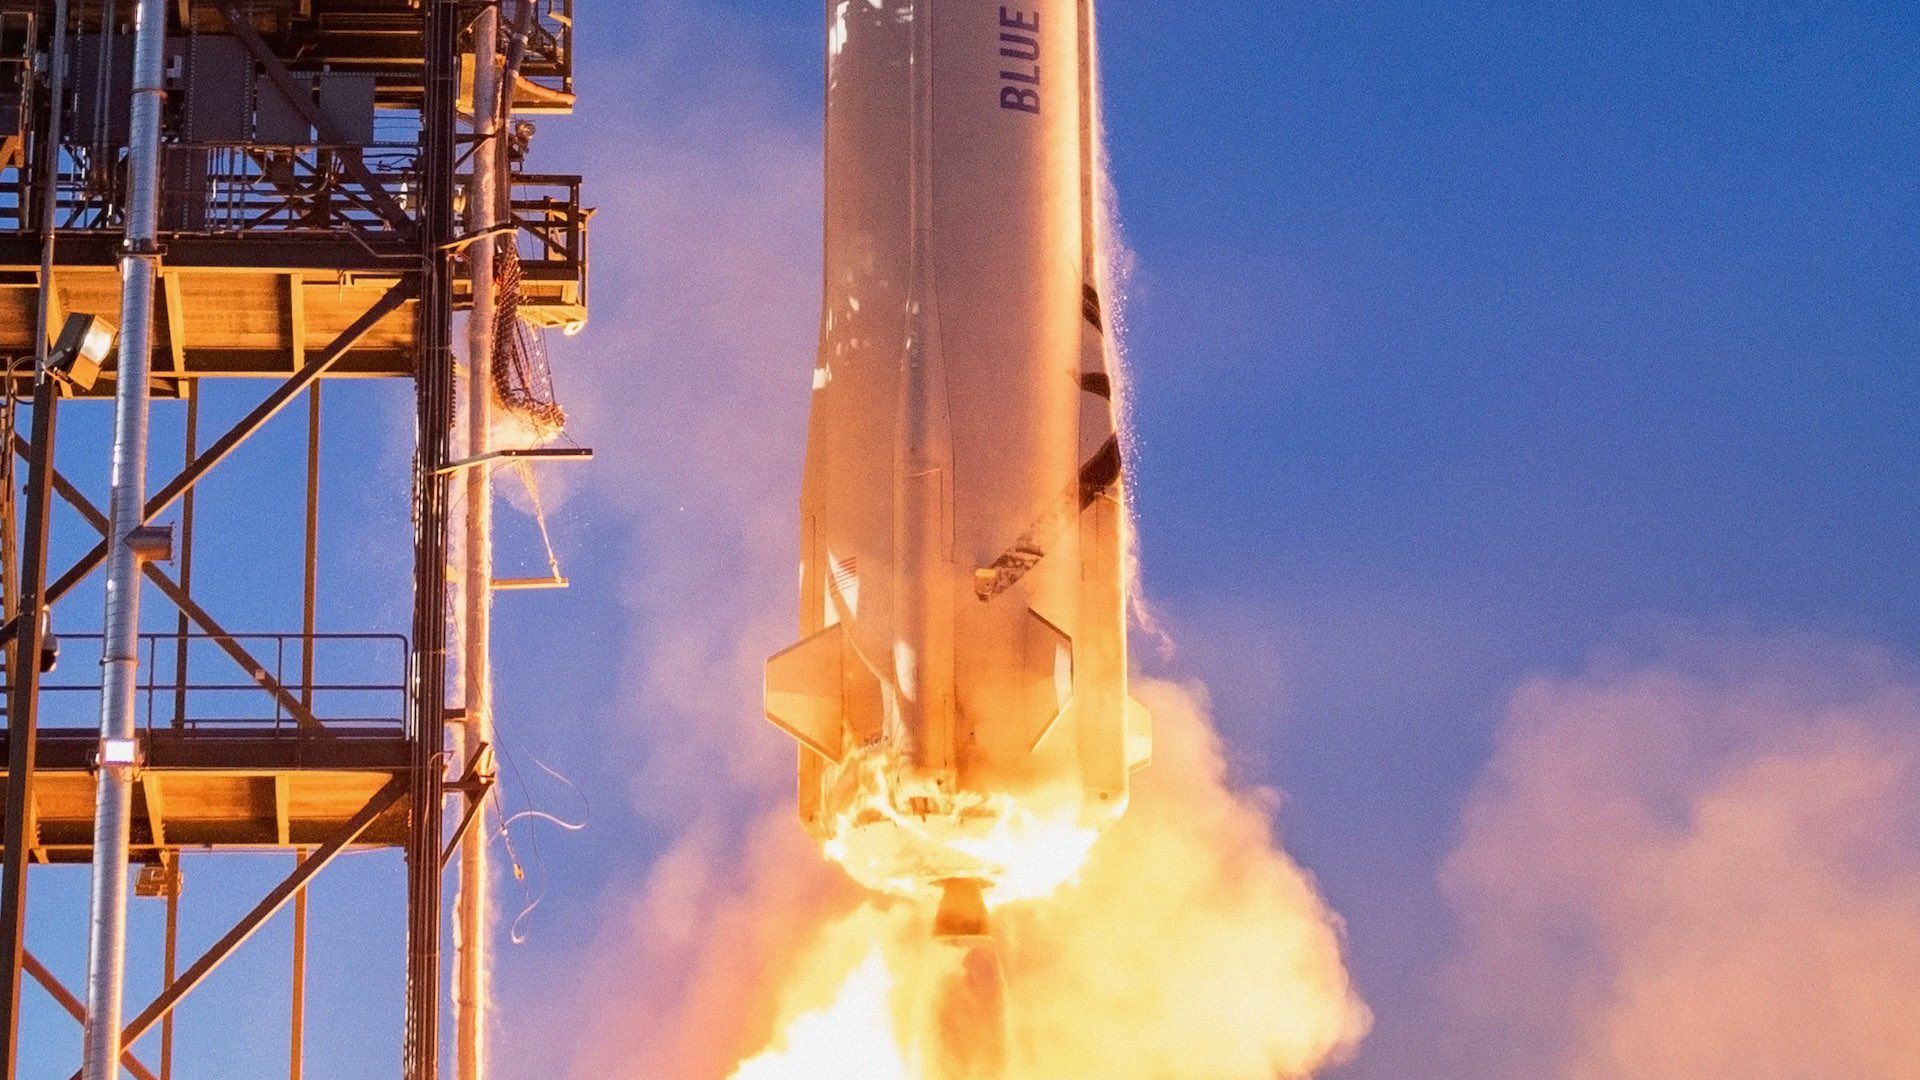 A close-up of a fiery rocket launch by Blue Origin